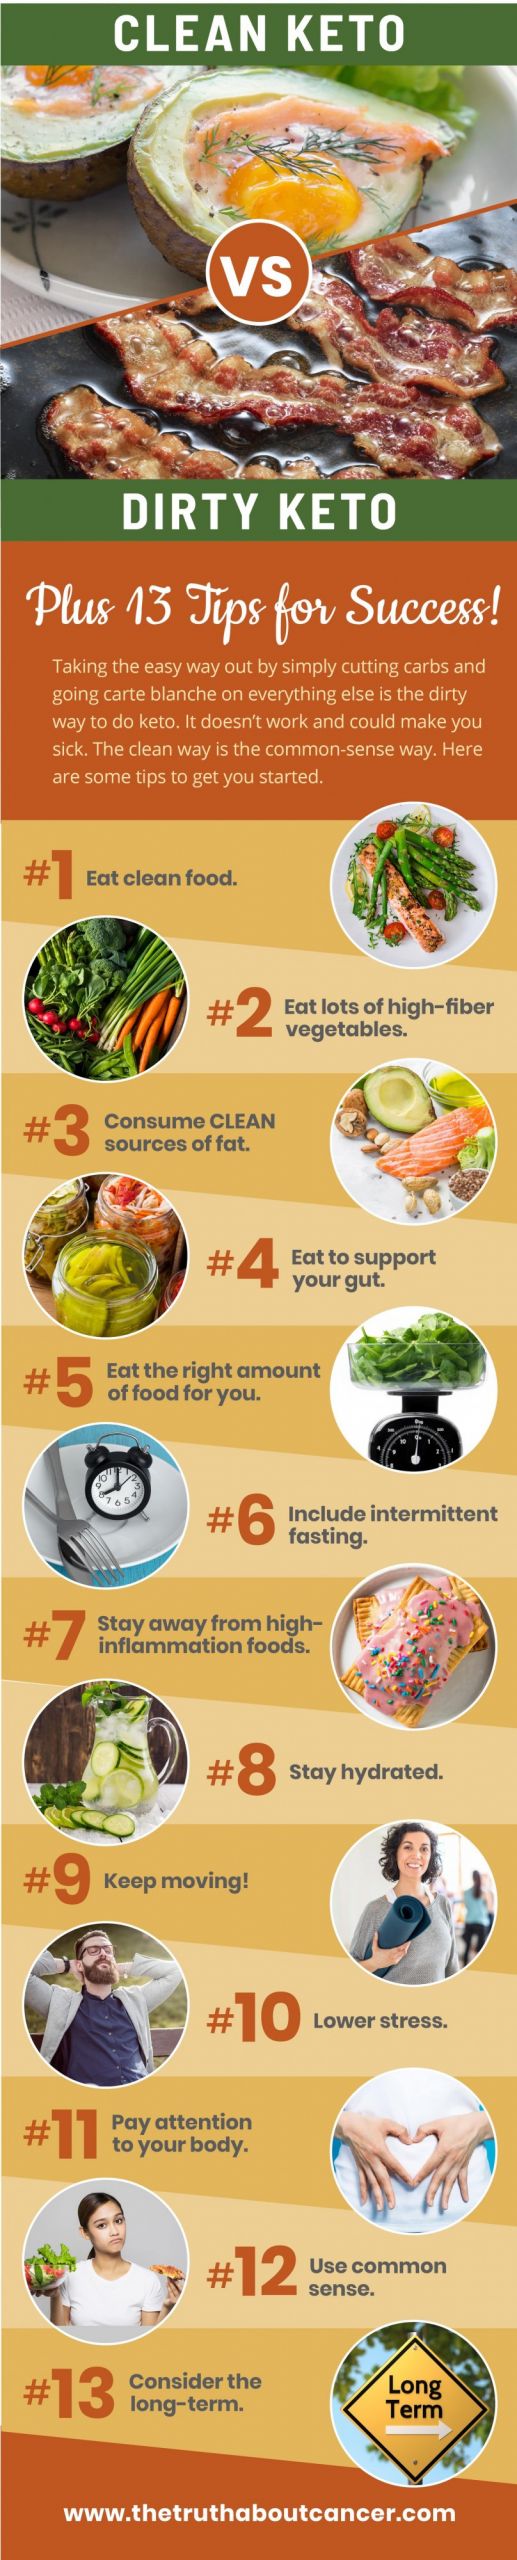 Clean Keto List
 Clean Keto Diet vs Dirty Keto Diet PLUS 13 Tips for